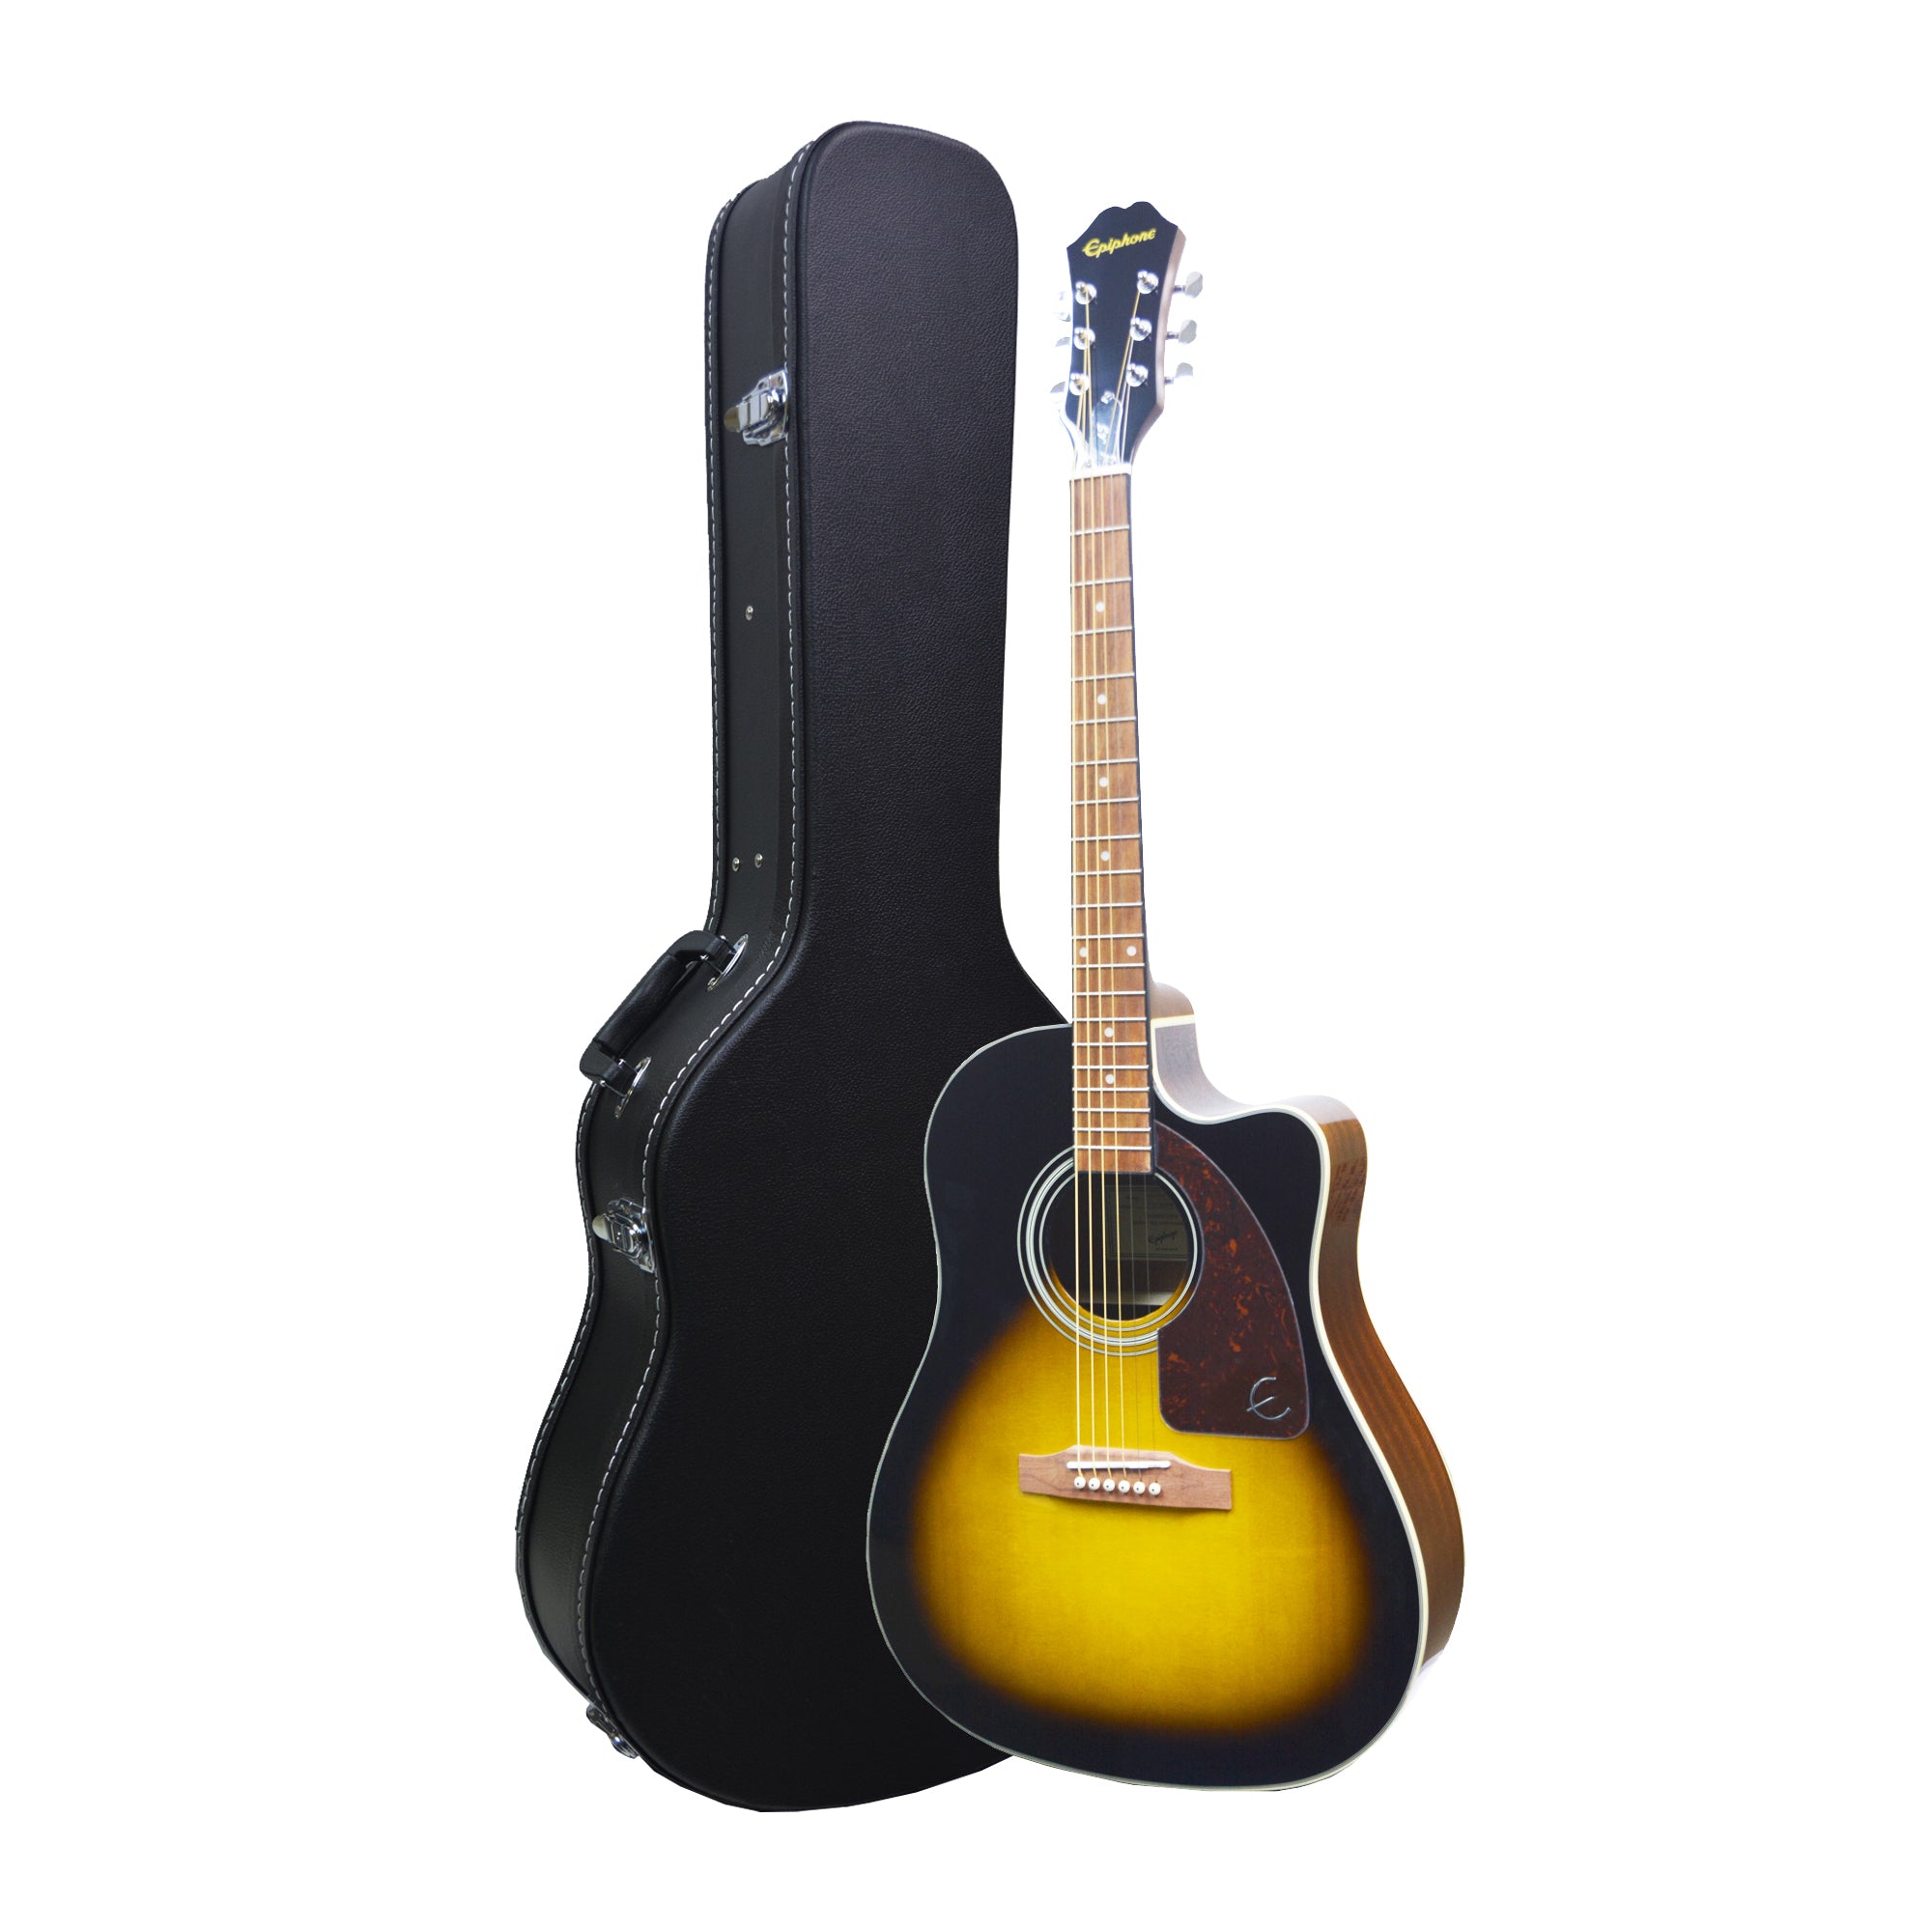 Epiphone EE21VSCH1 J-15 EC Deluxe Fishman Presys-II Sunburst Acoustic/Electric Guitar with Hardcase